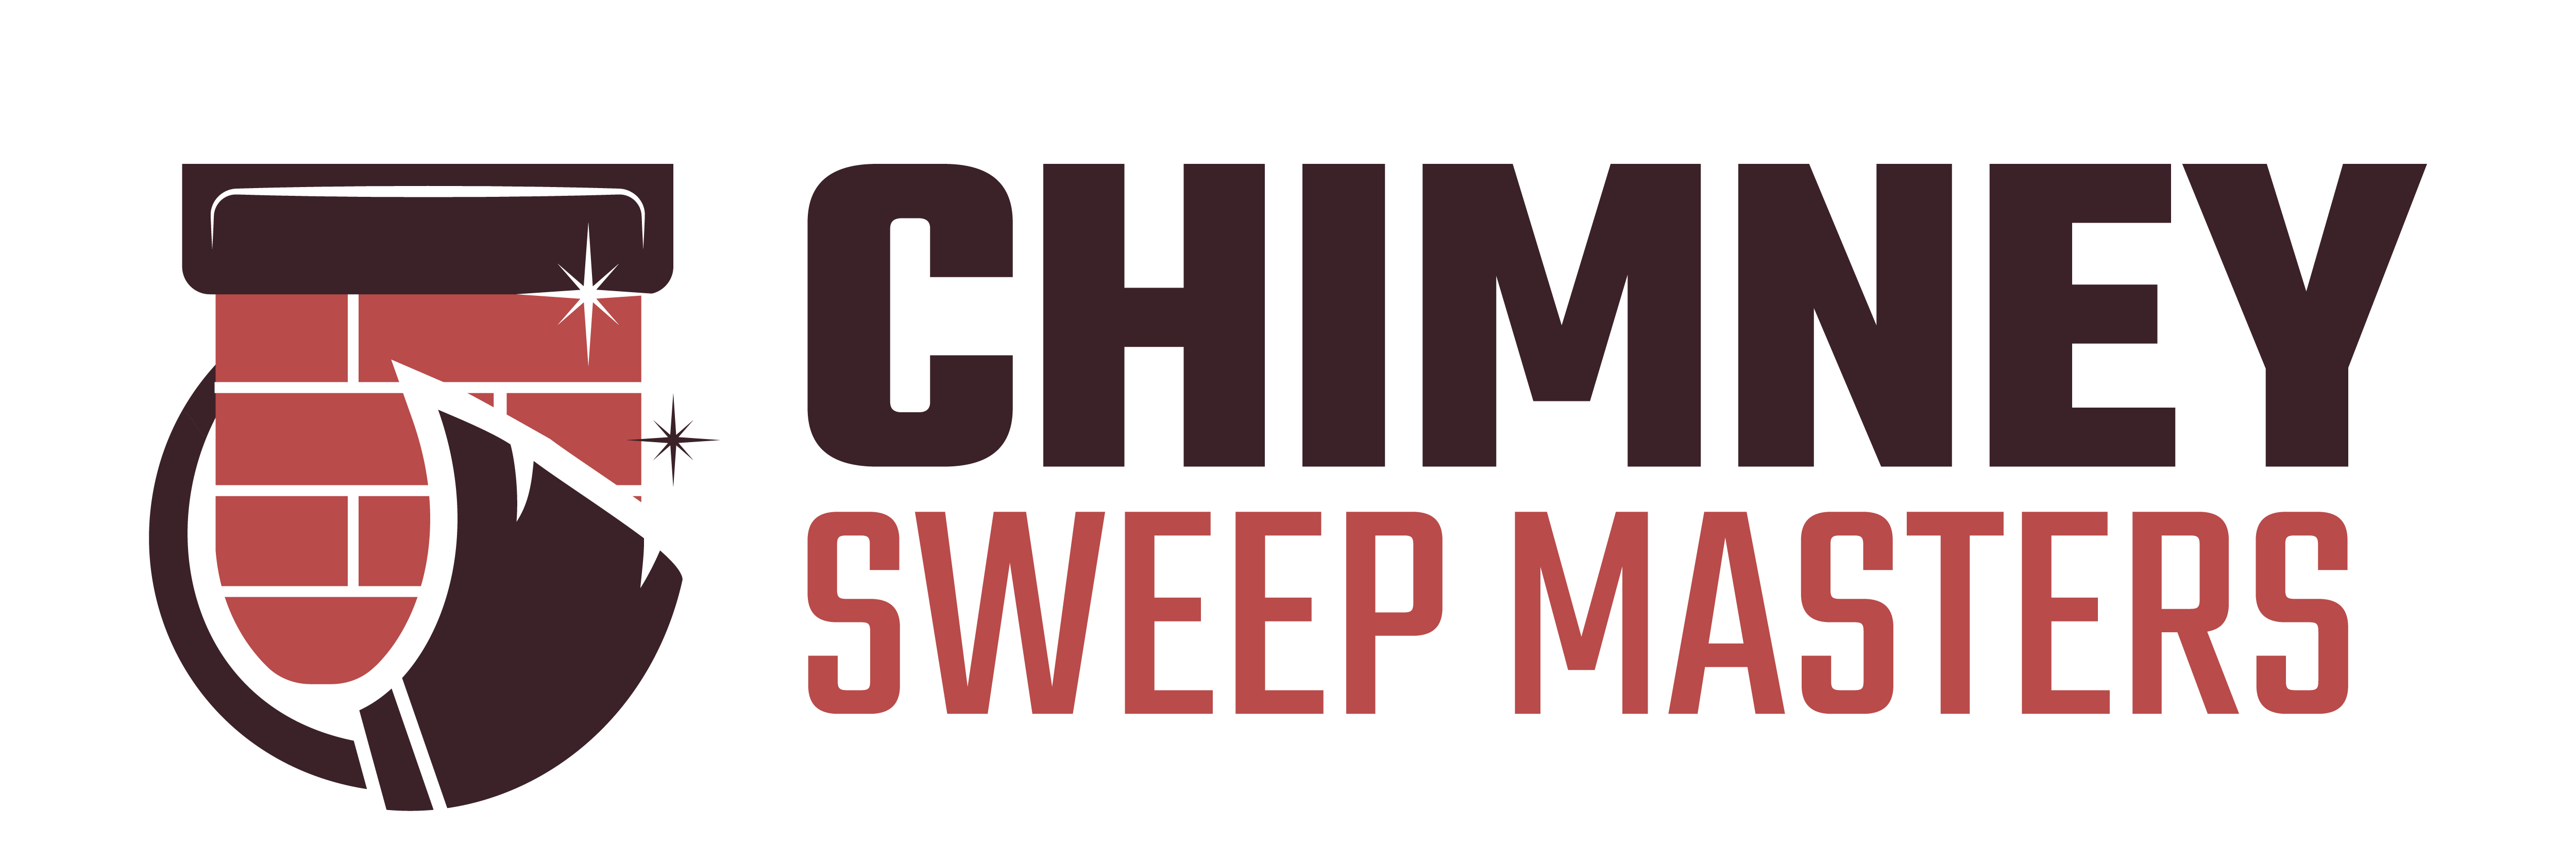 Chimney Sweep Masters Wagon Wheel Logo